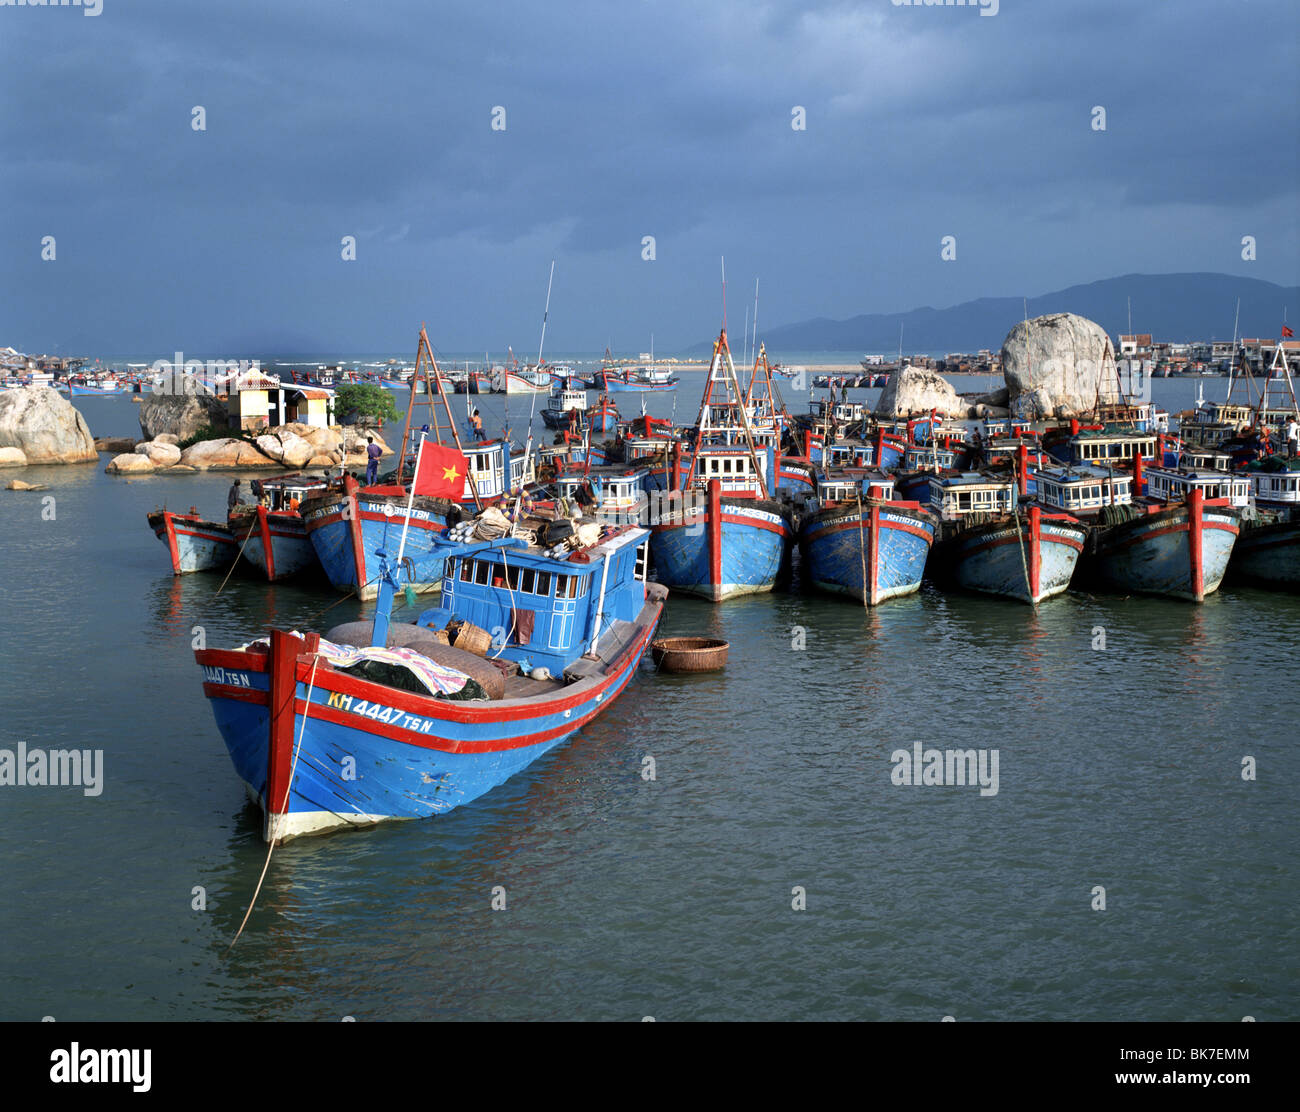 Puerto pesquero, Na Trang, Vietnam, Indochina, en el sudeste de Asia, Asia Foto de stock